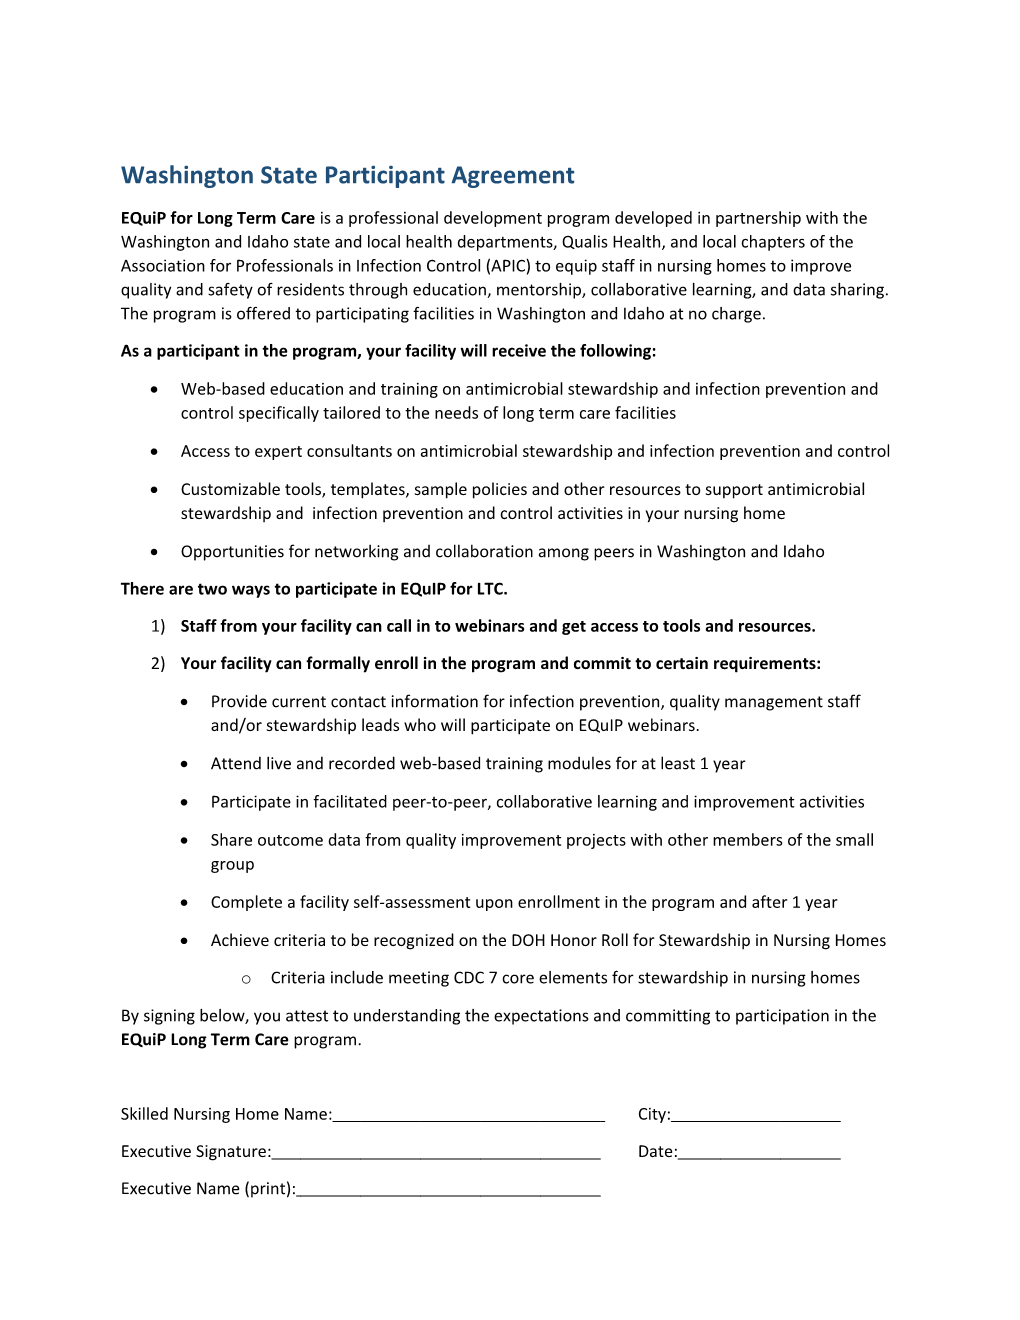 Equip LTC WA Participant Agreement and Enrollment Form